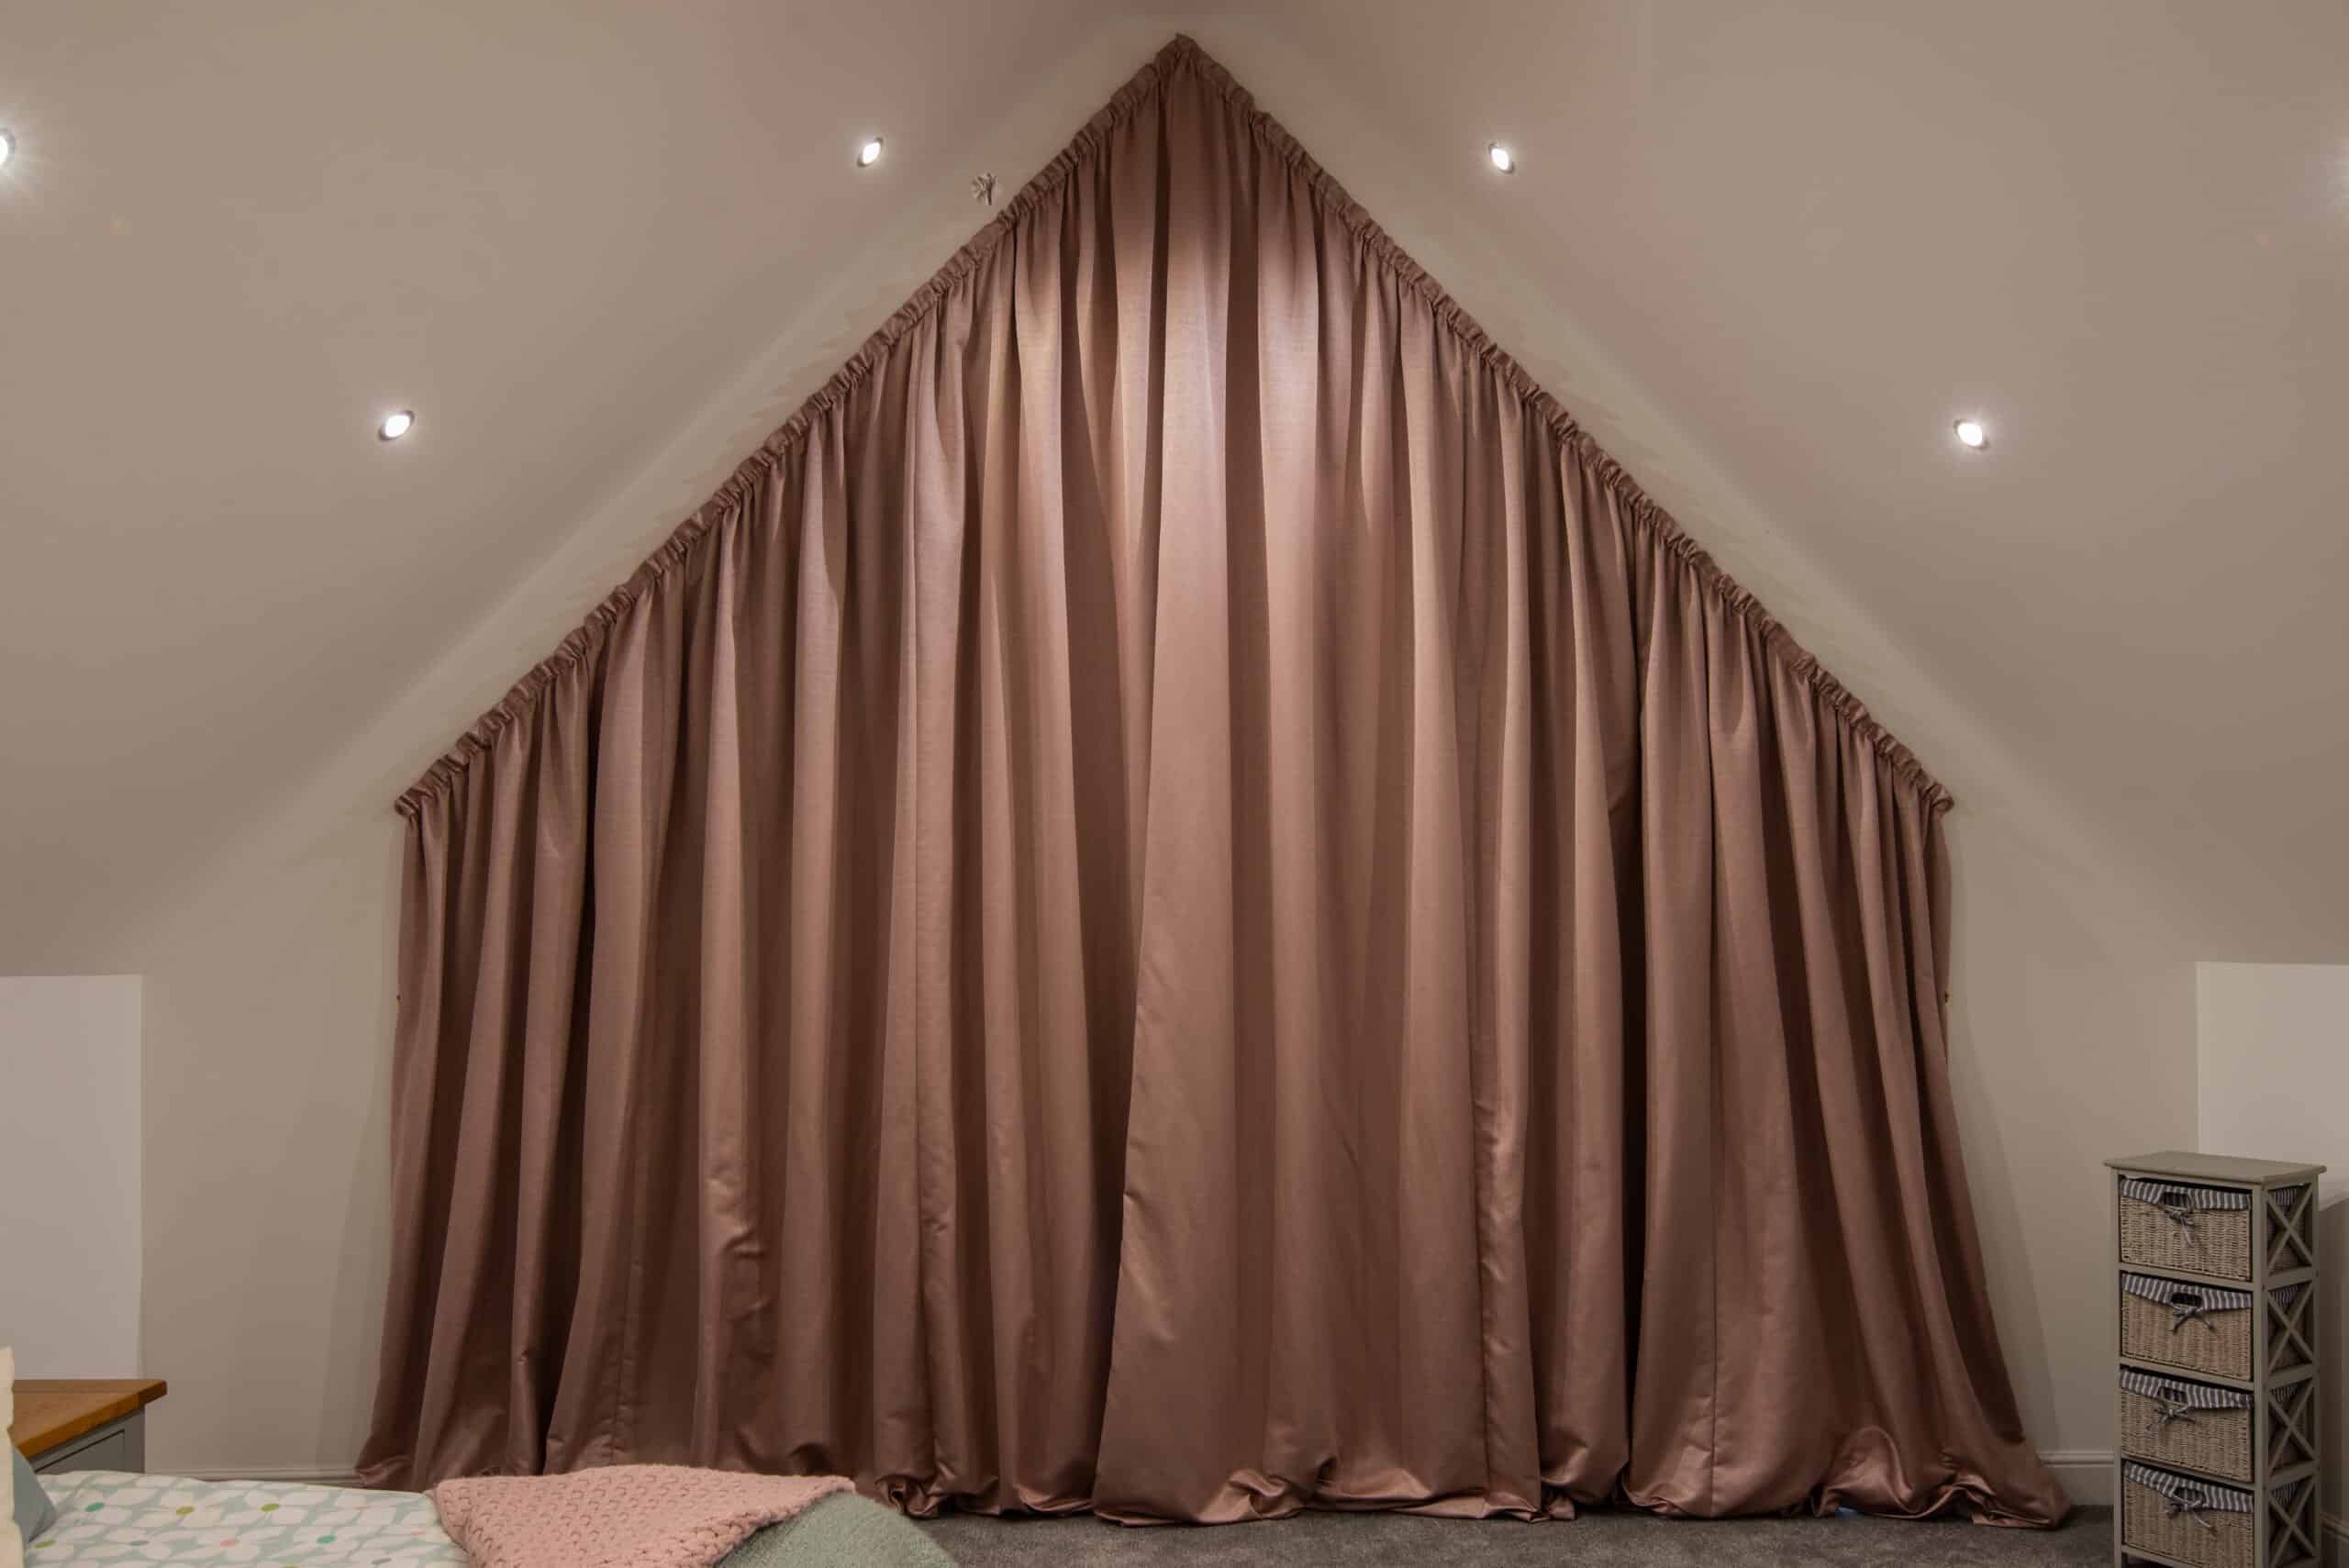 Apex curtains in plain fabric